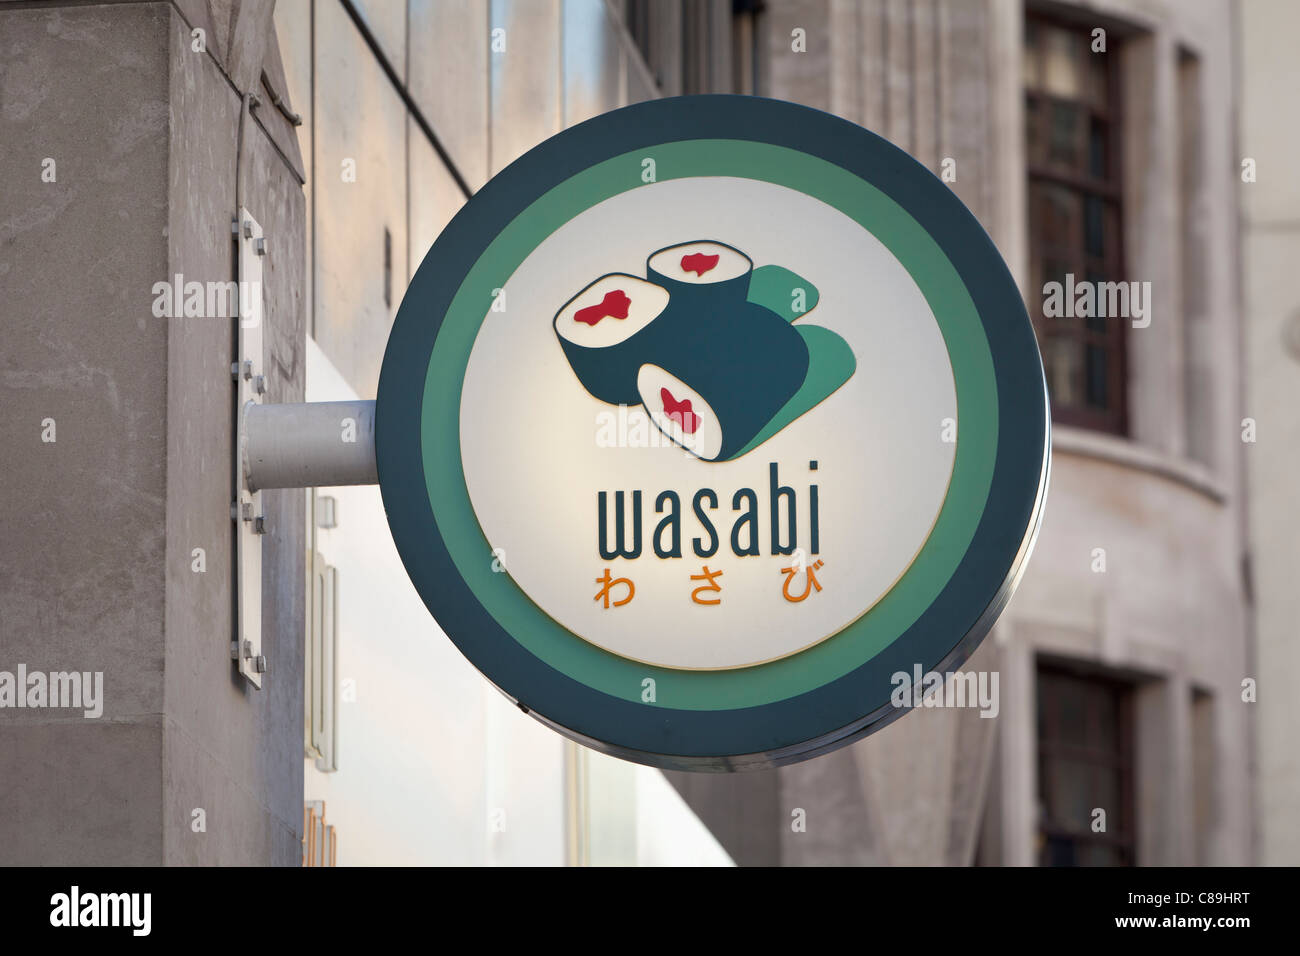 Wasabi sign and logo London England Stock Photo